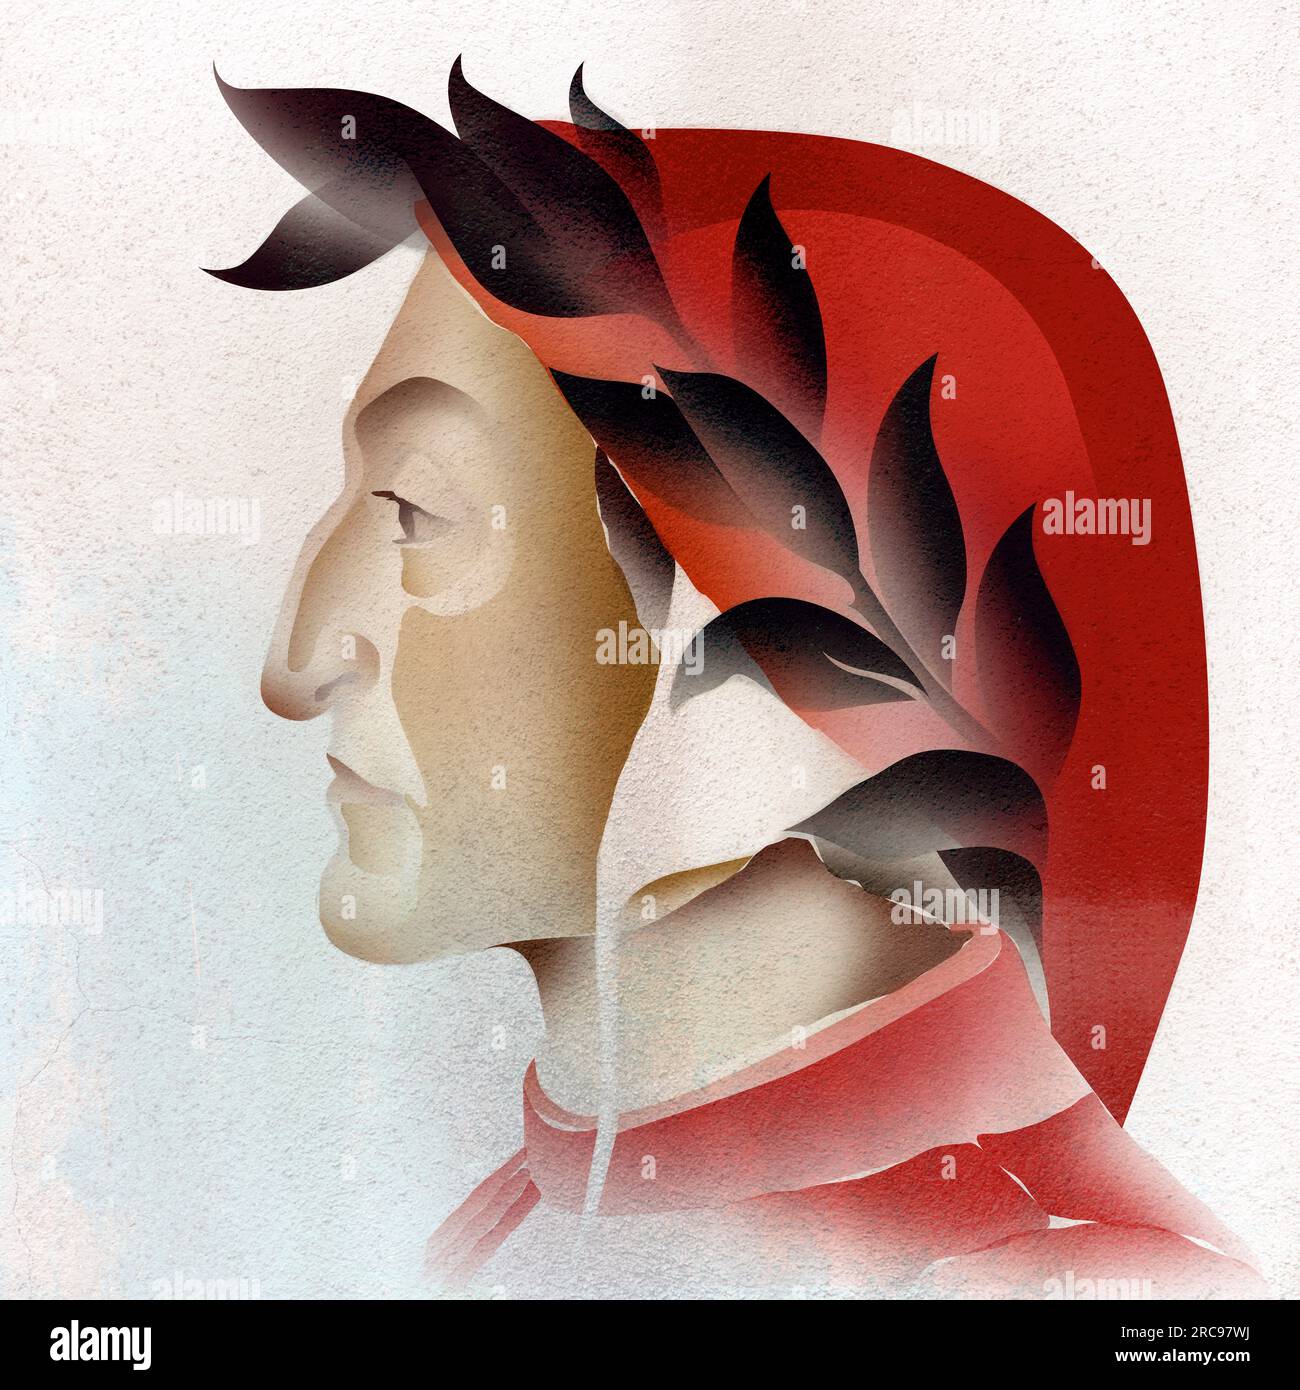 Stylized profile portrait illustration of Dante Alighieri, the legendary Italian poet. Stock Photo